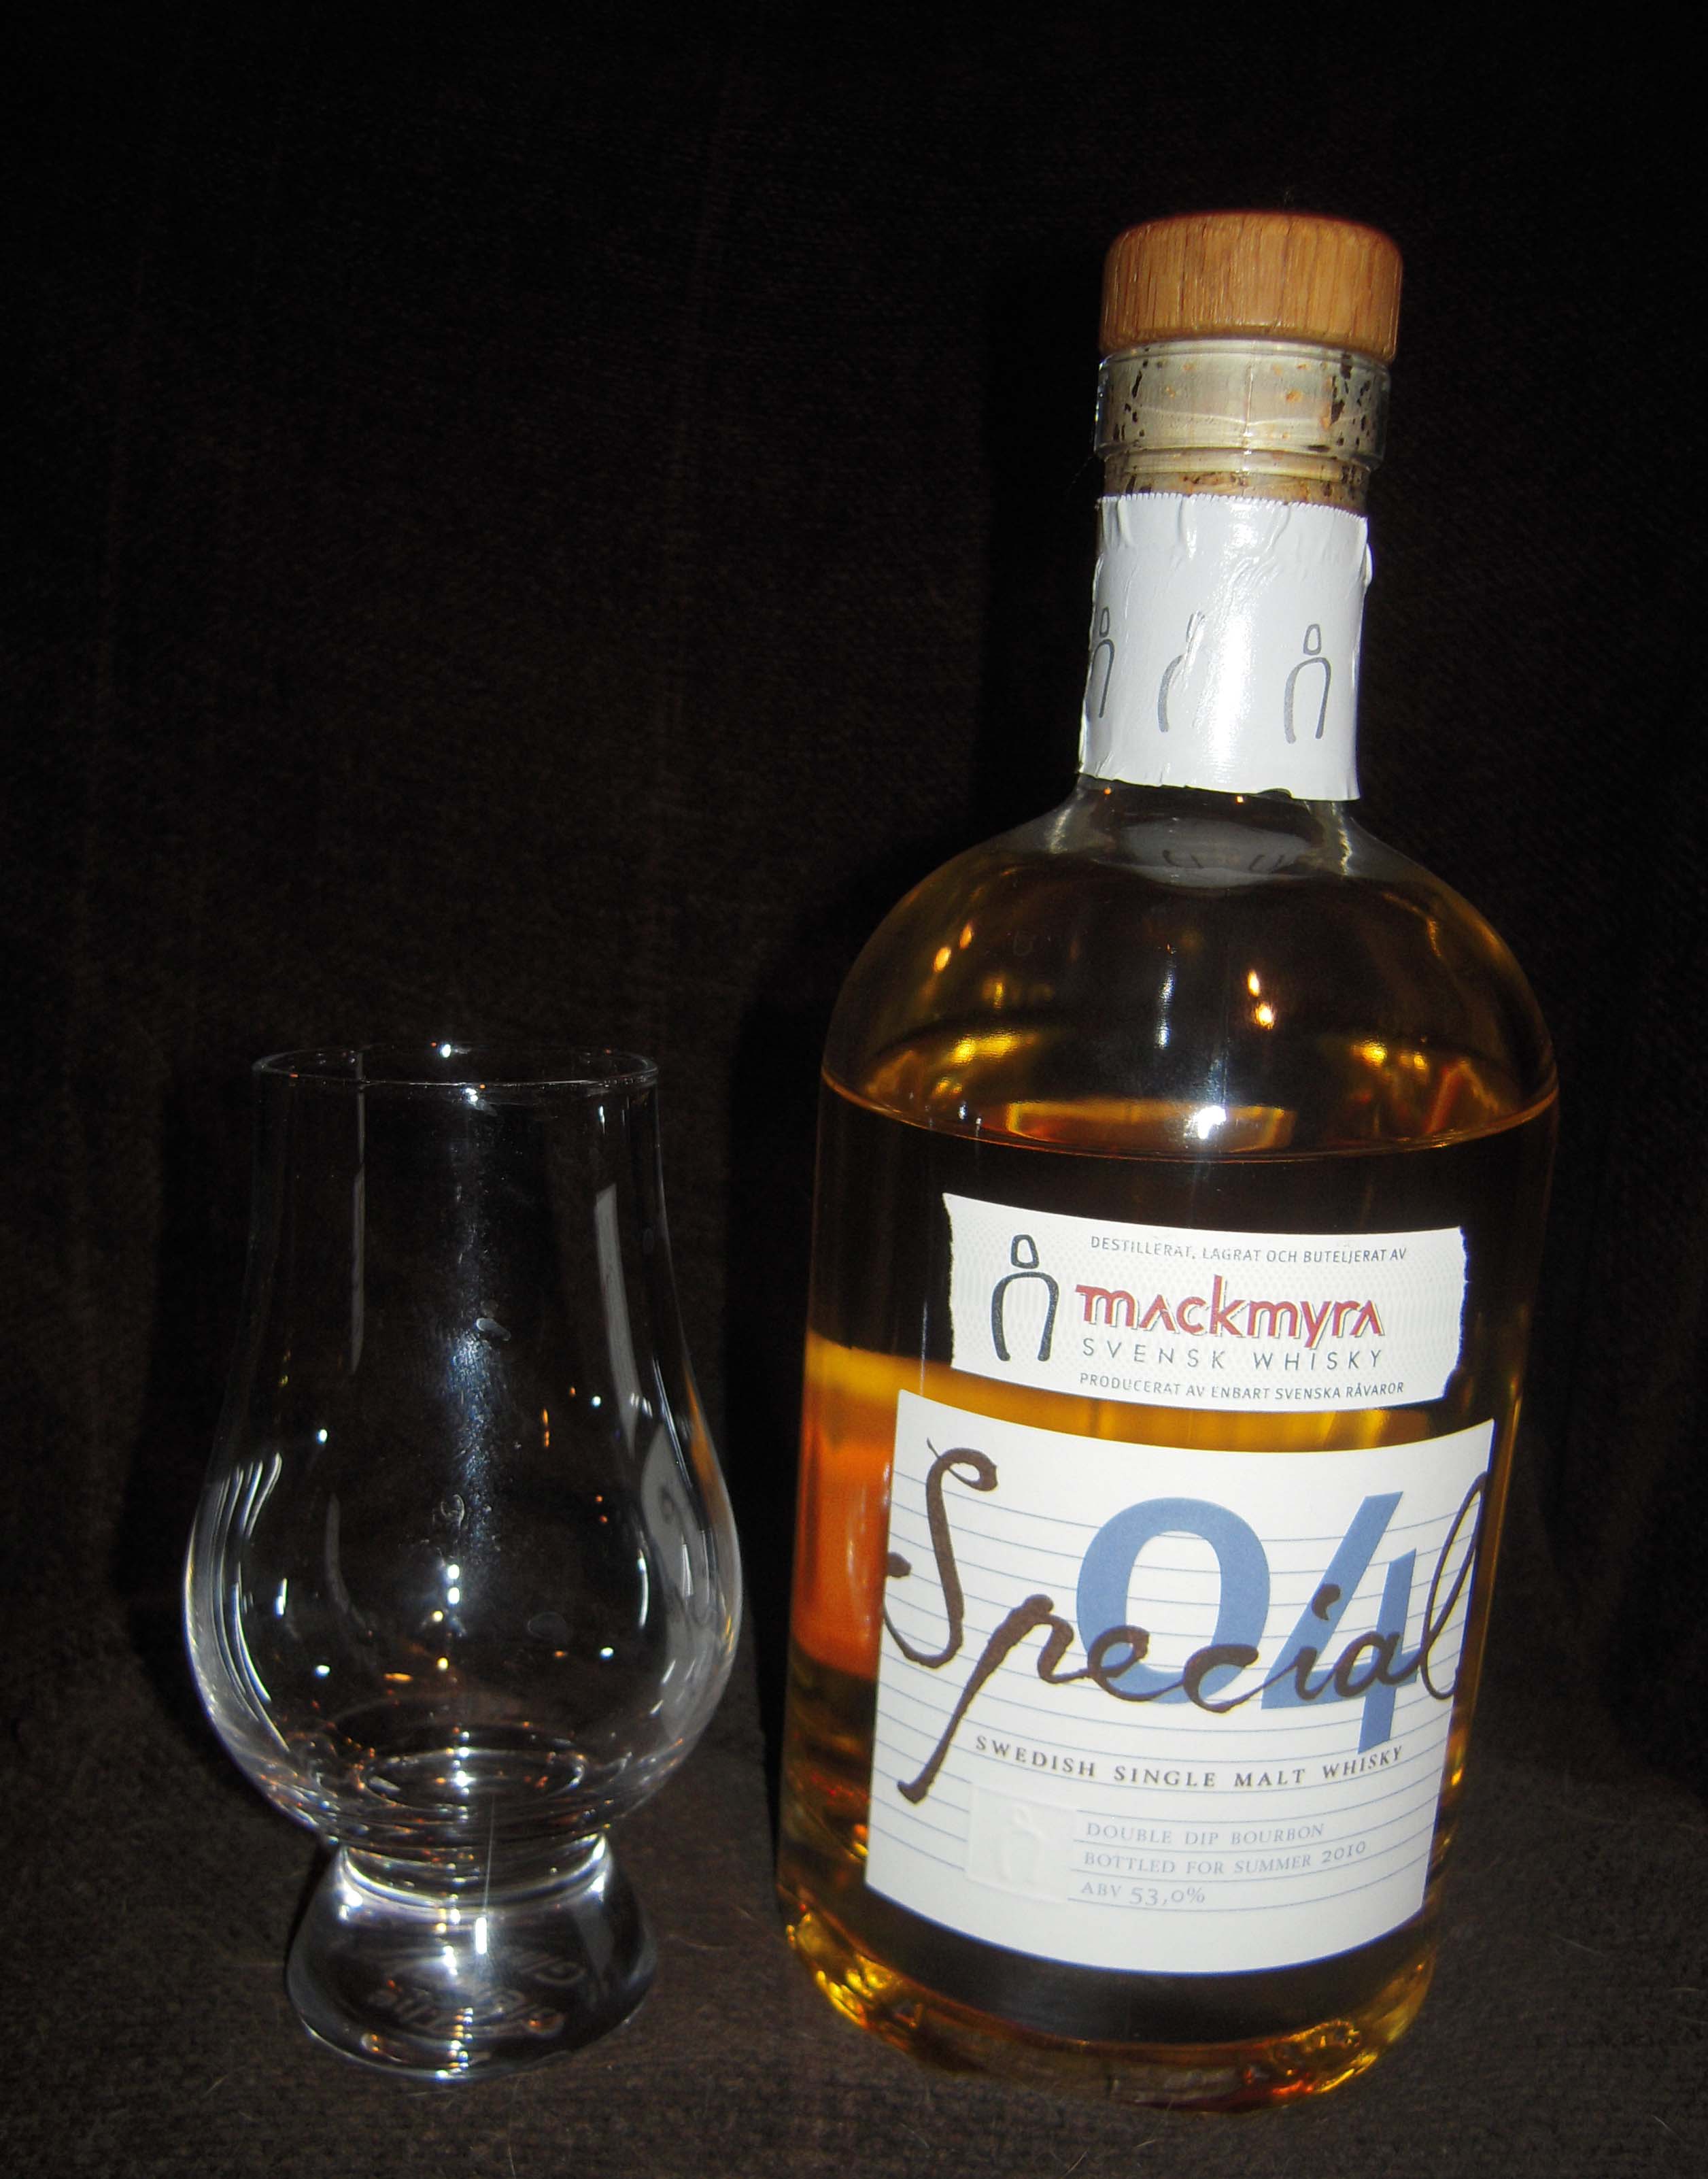 Mackmyra - swedish single malt whisky